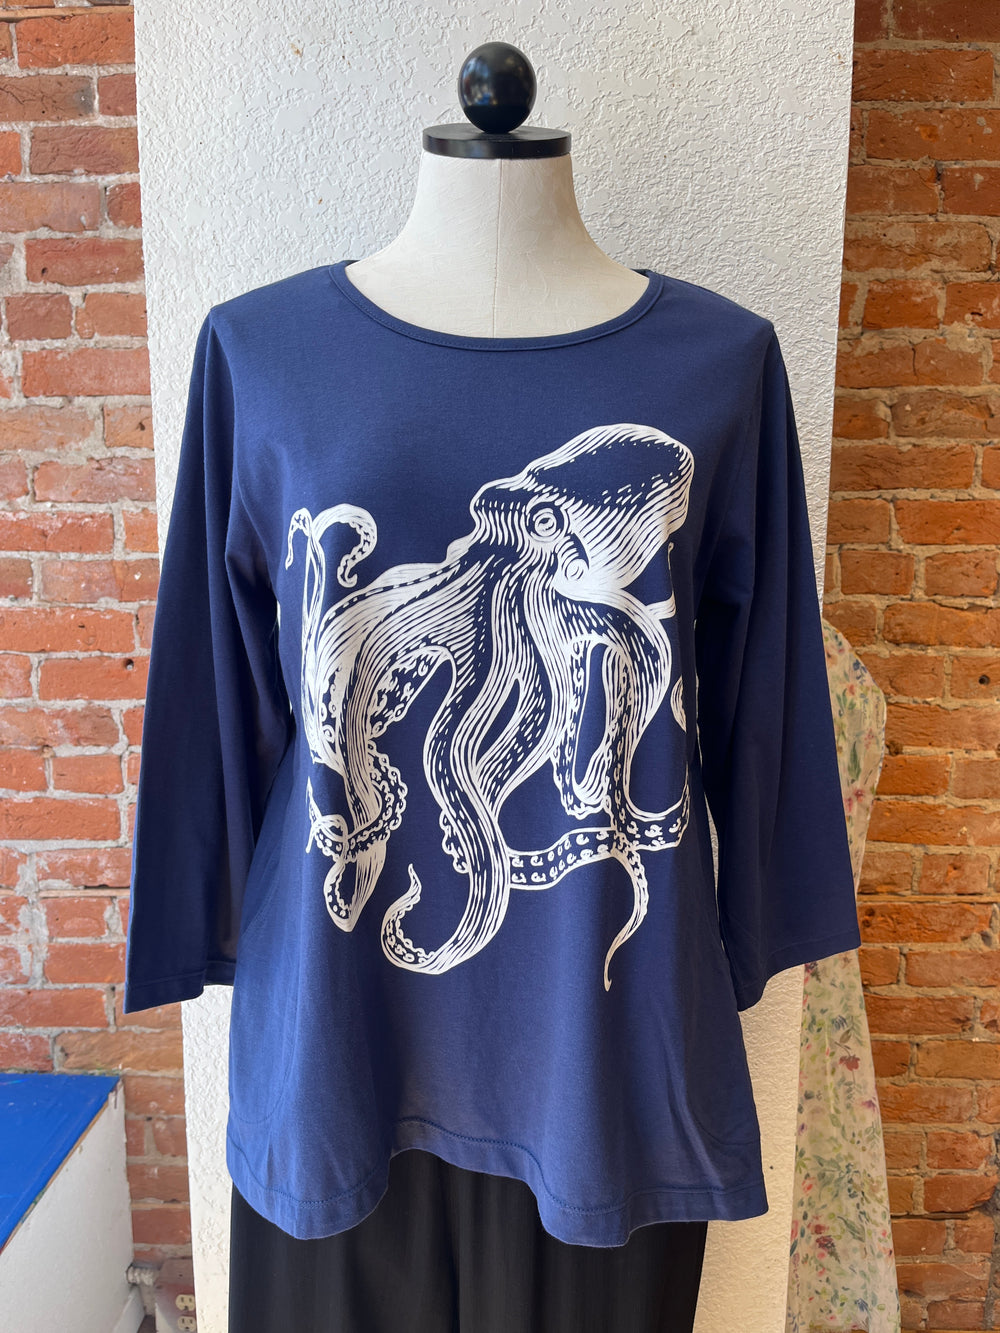 Flutter Ricky t-shirt, octopus image